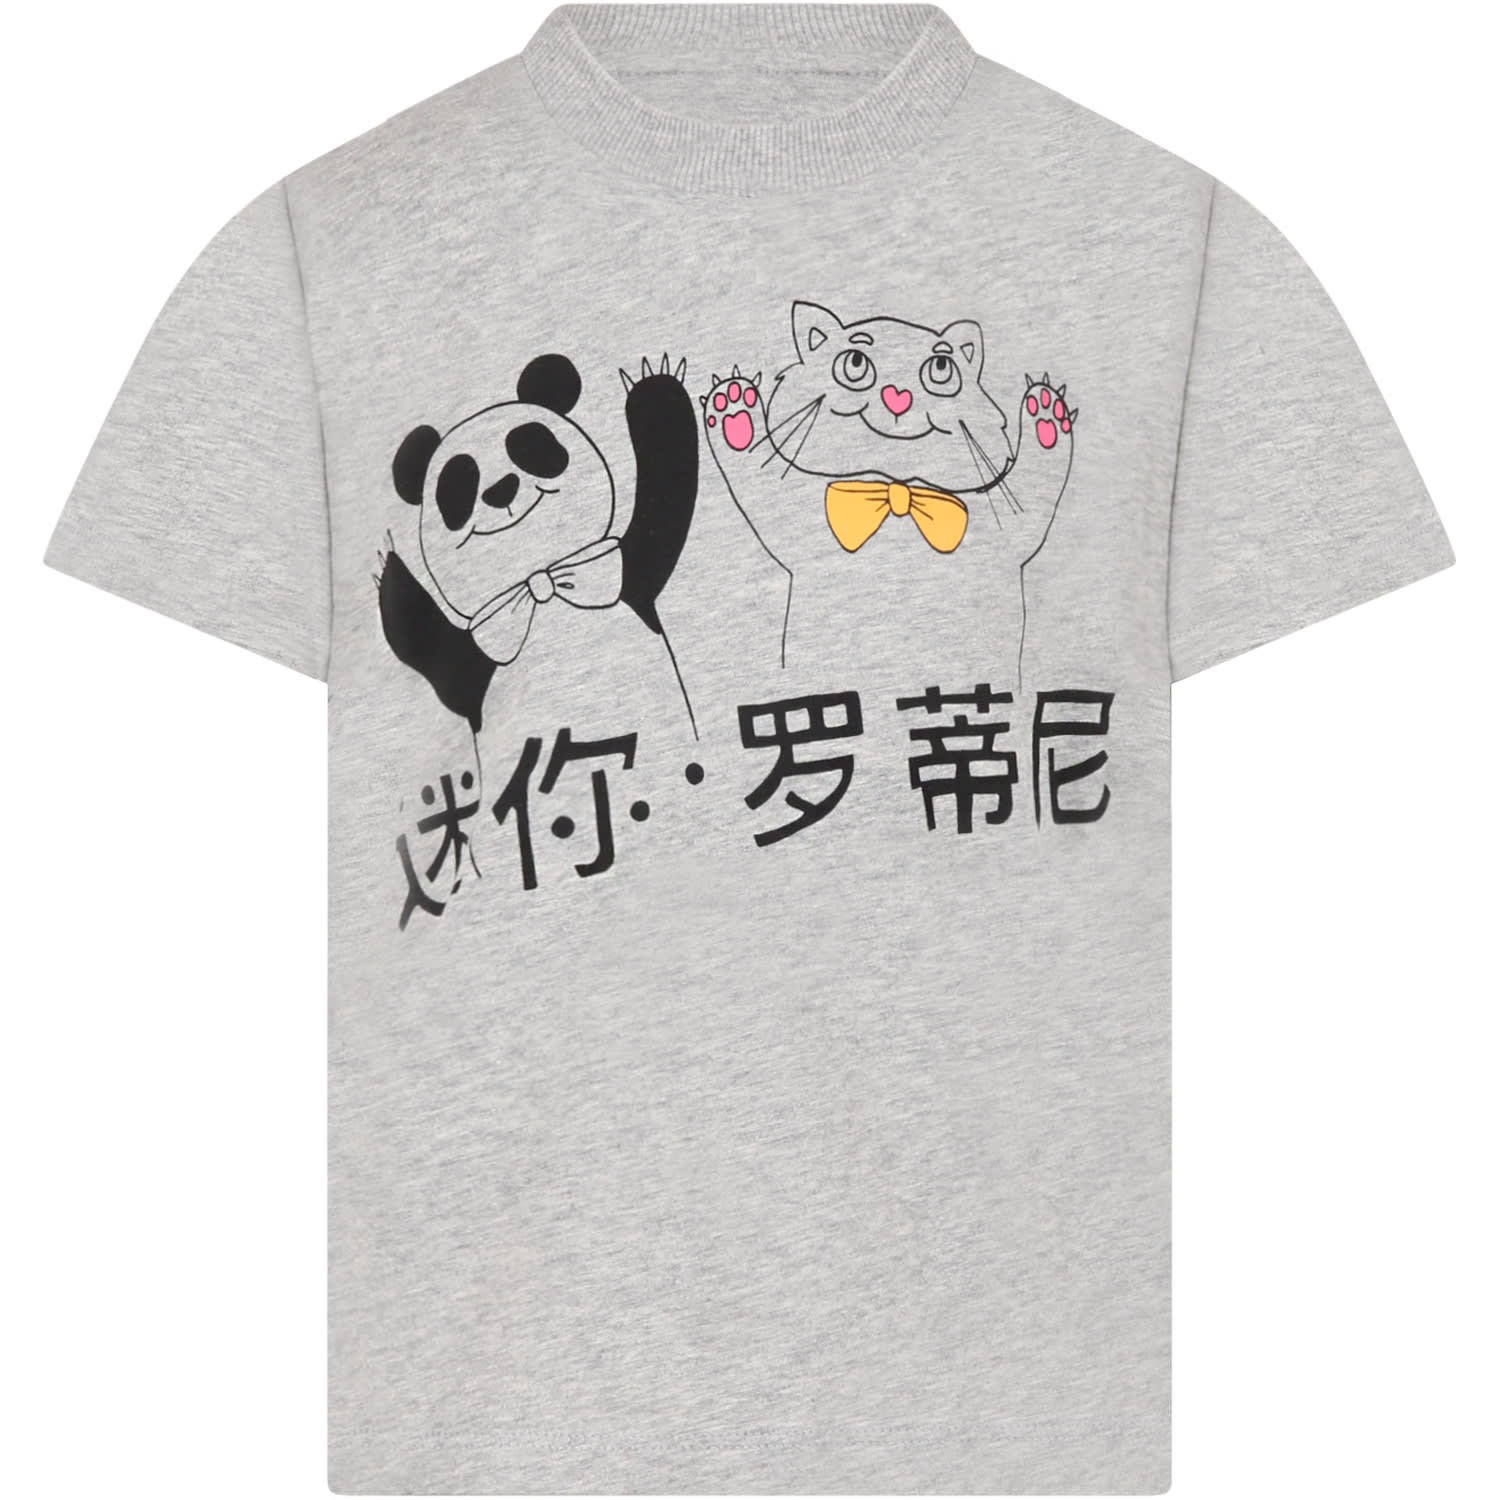 Mini Rodini Grey T-shirt For Kids With Cat And Panda